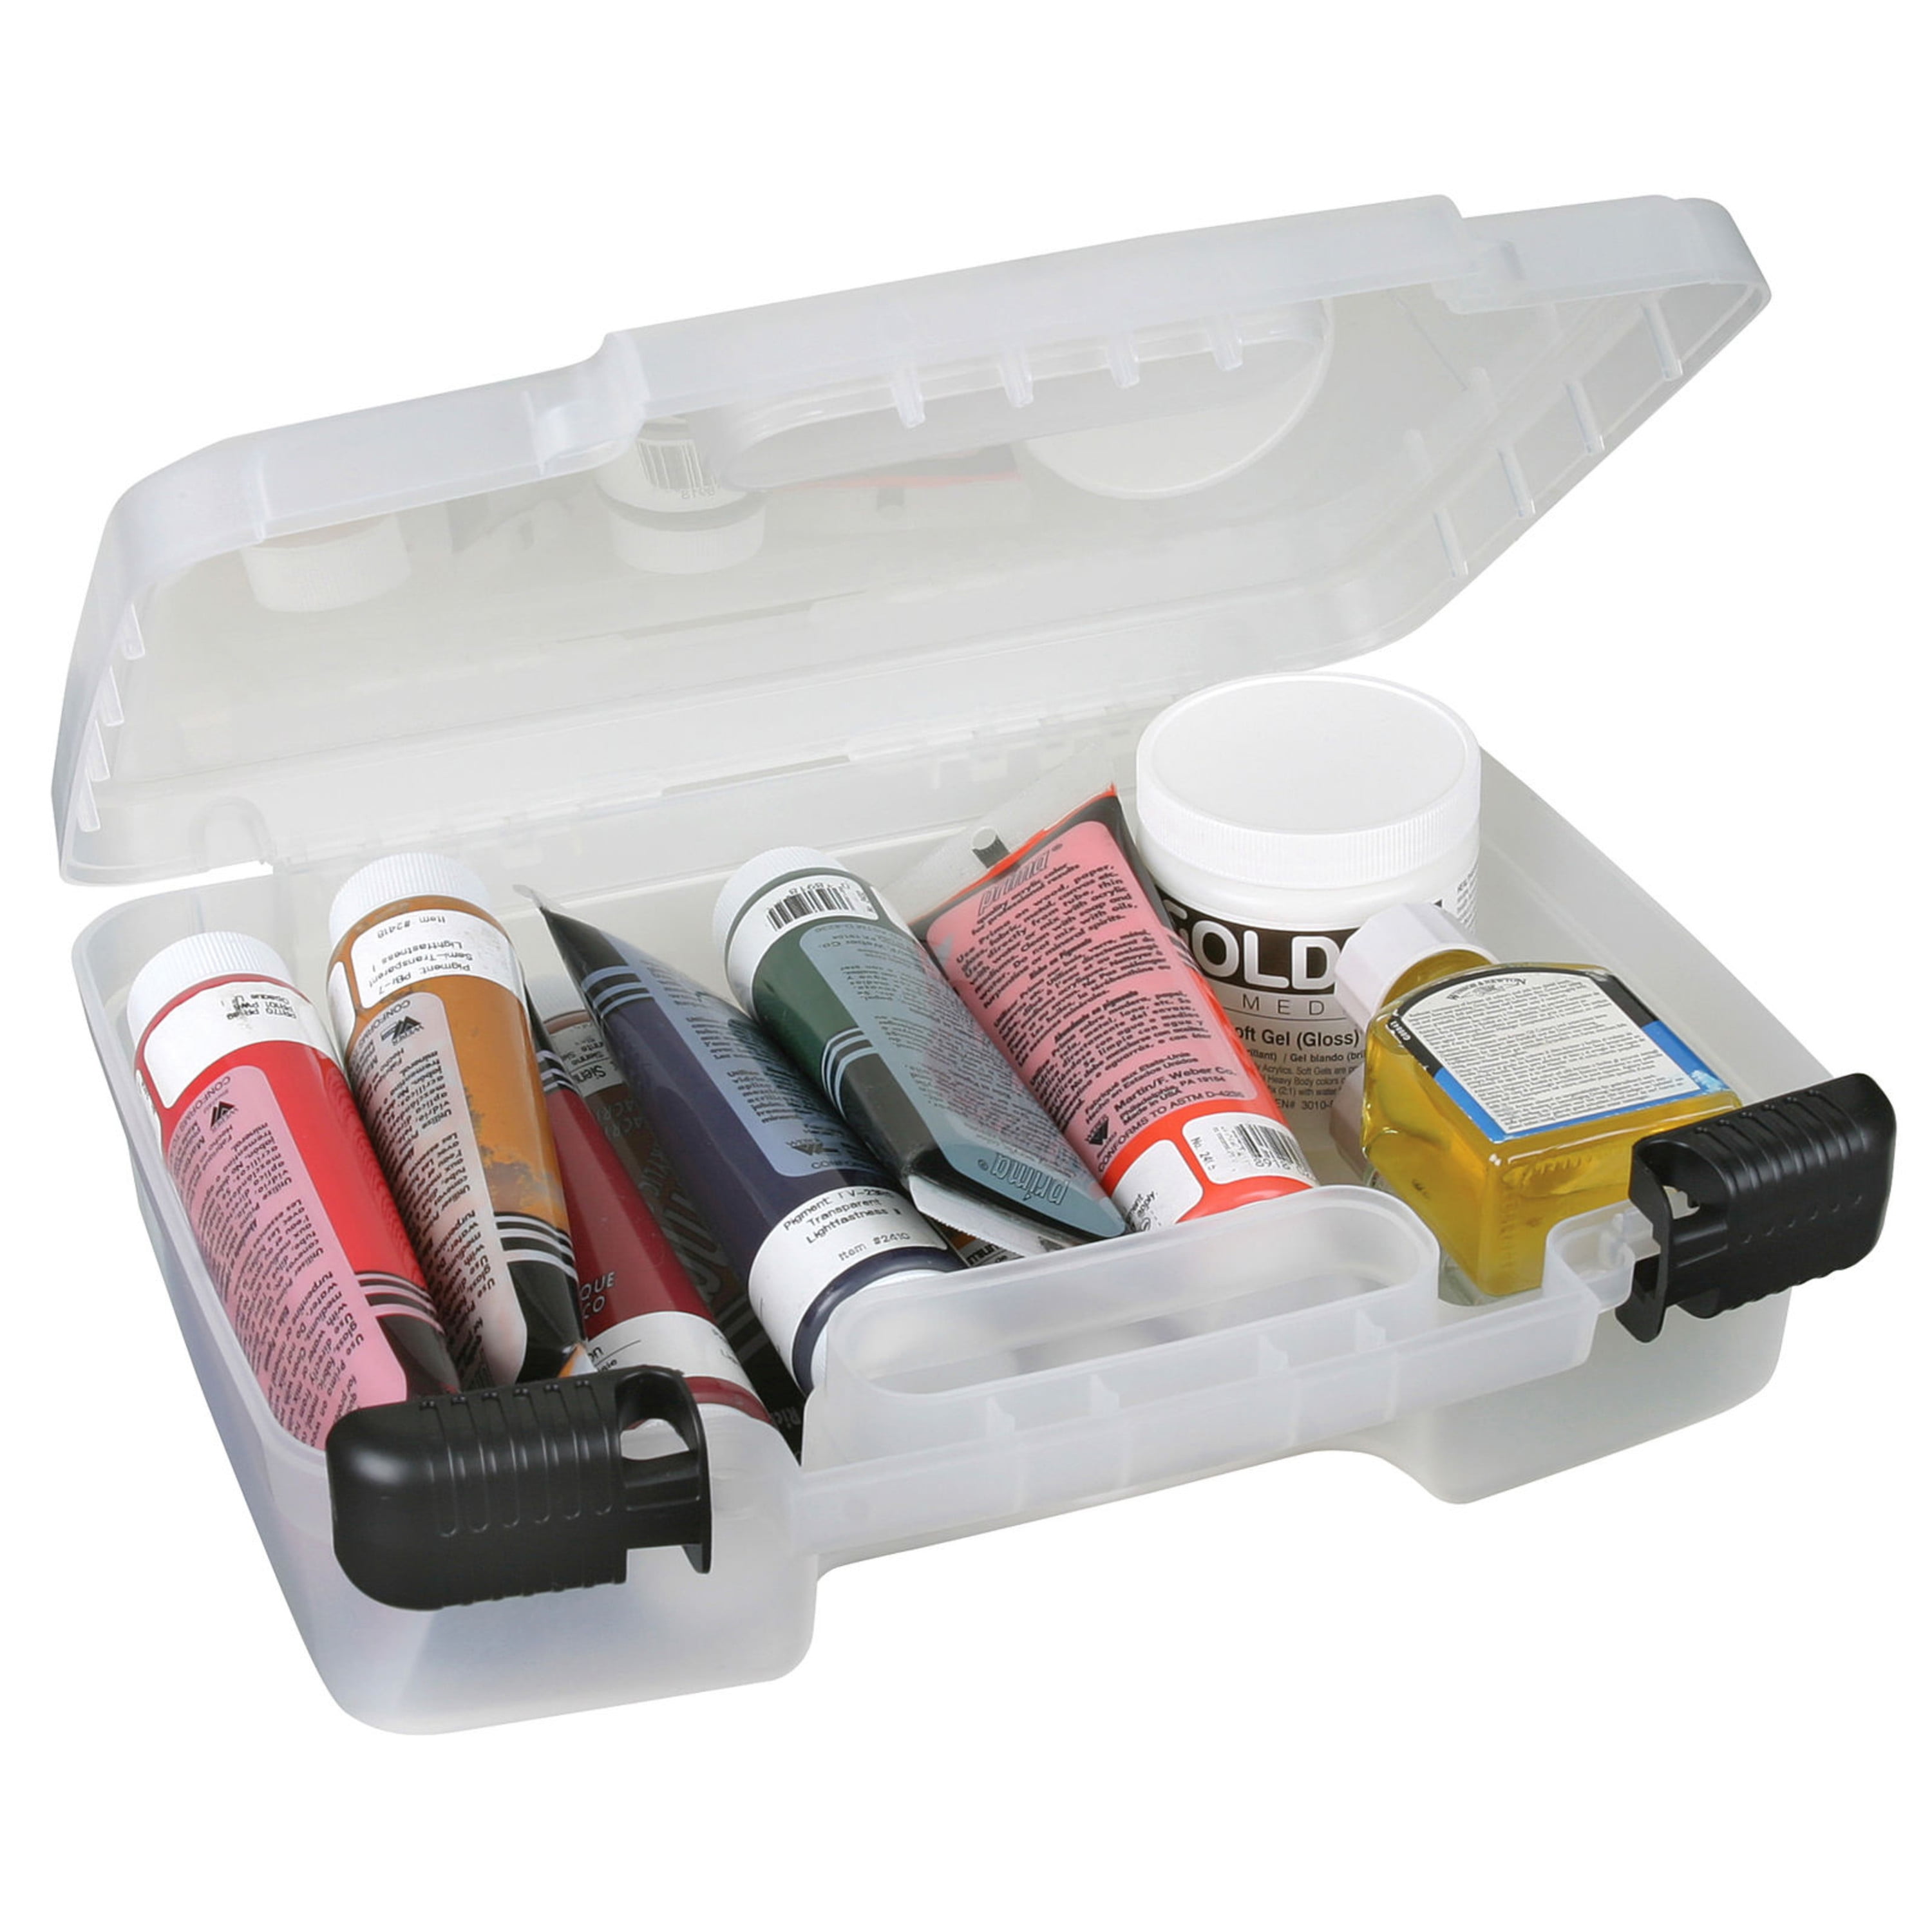 Essentials 12 x 12 Storage Box | ArtBin #6912AB